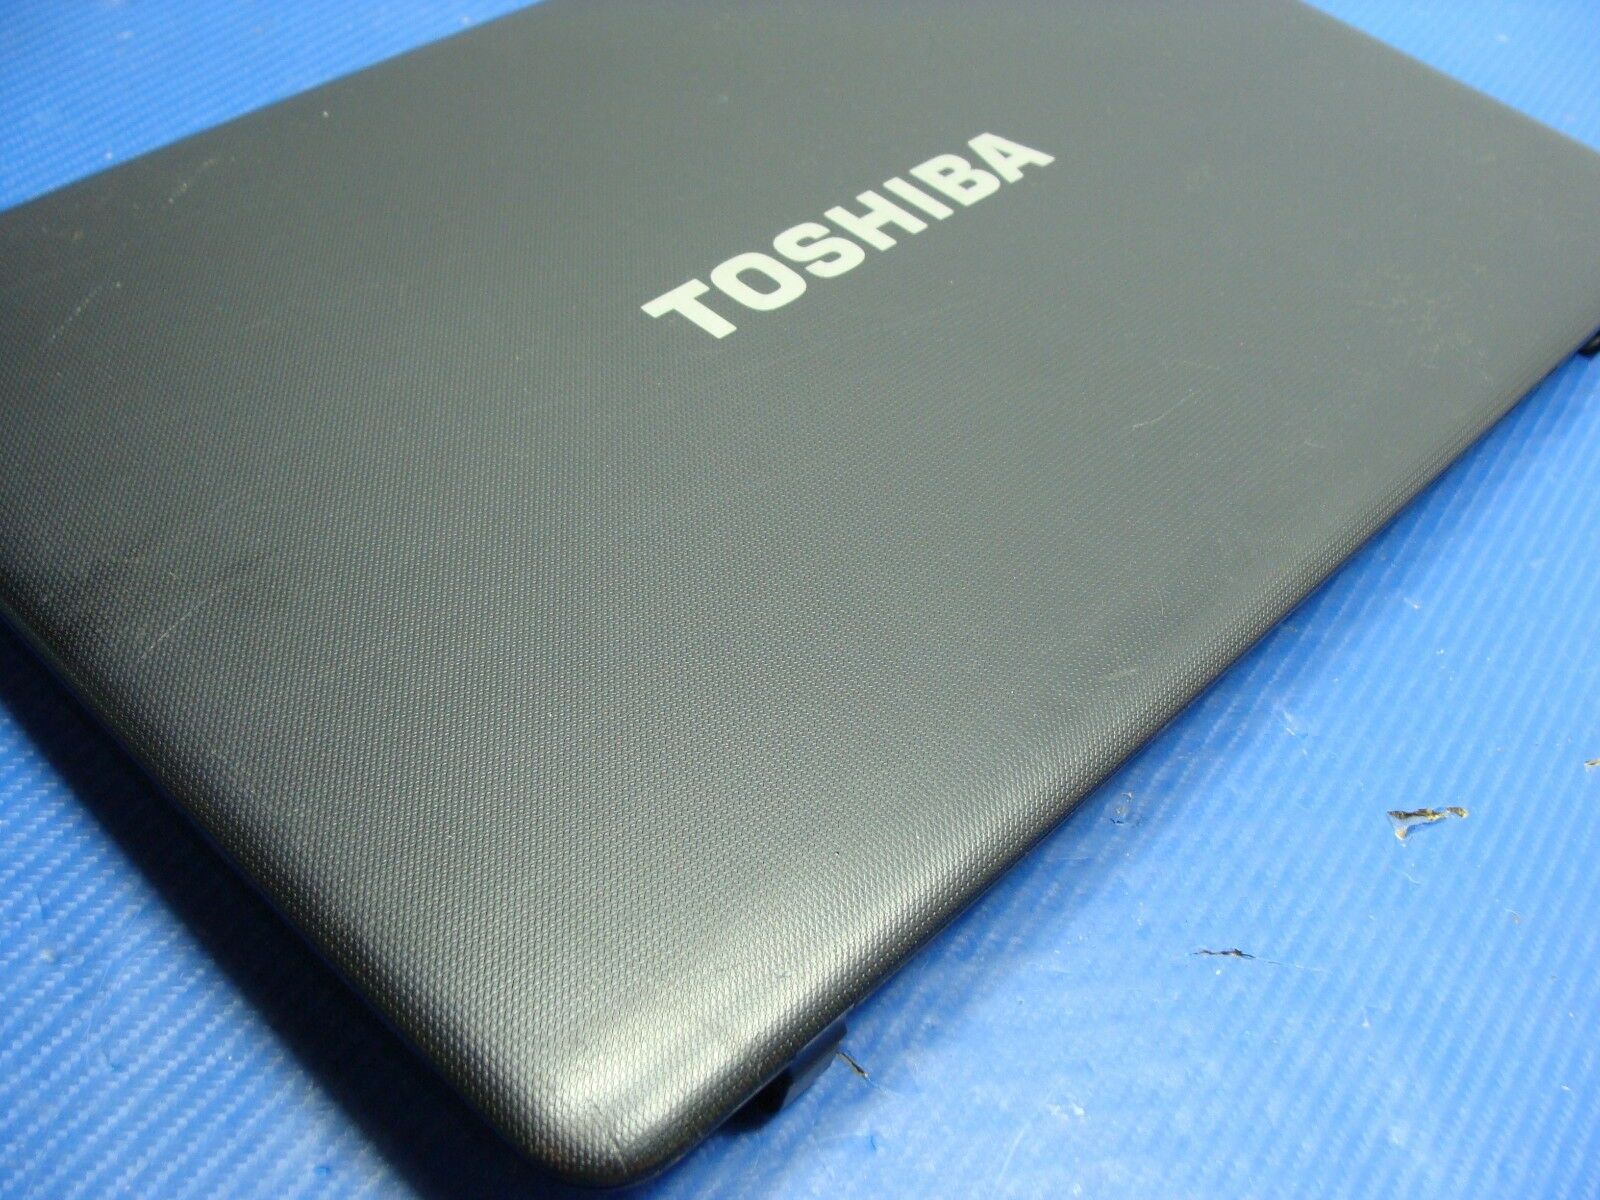 Toshiba Satellite C675-S7200 17.3